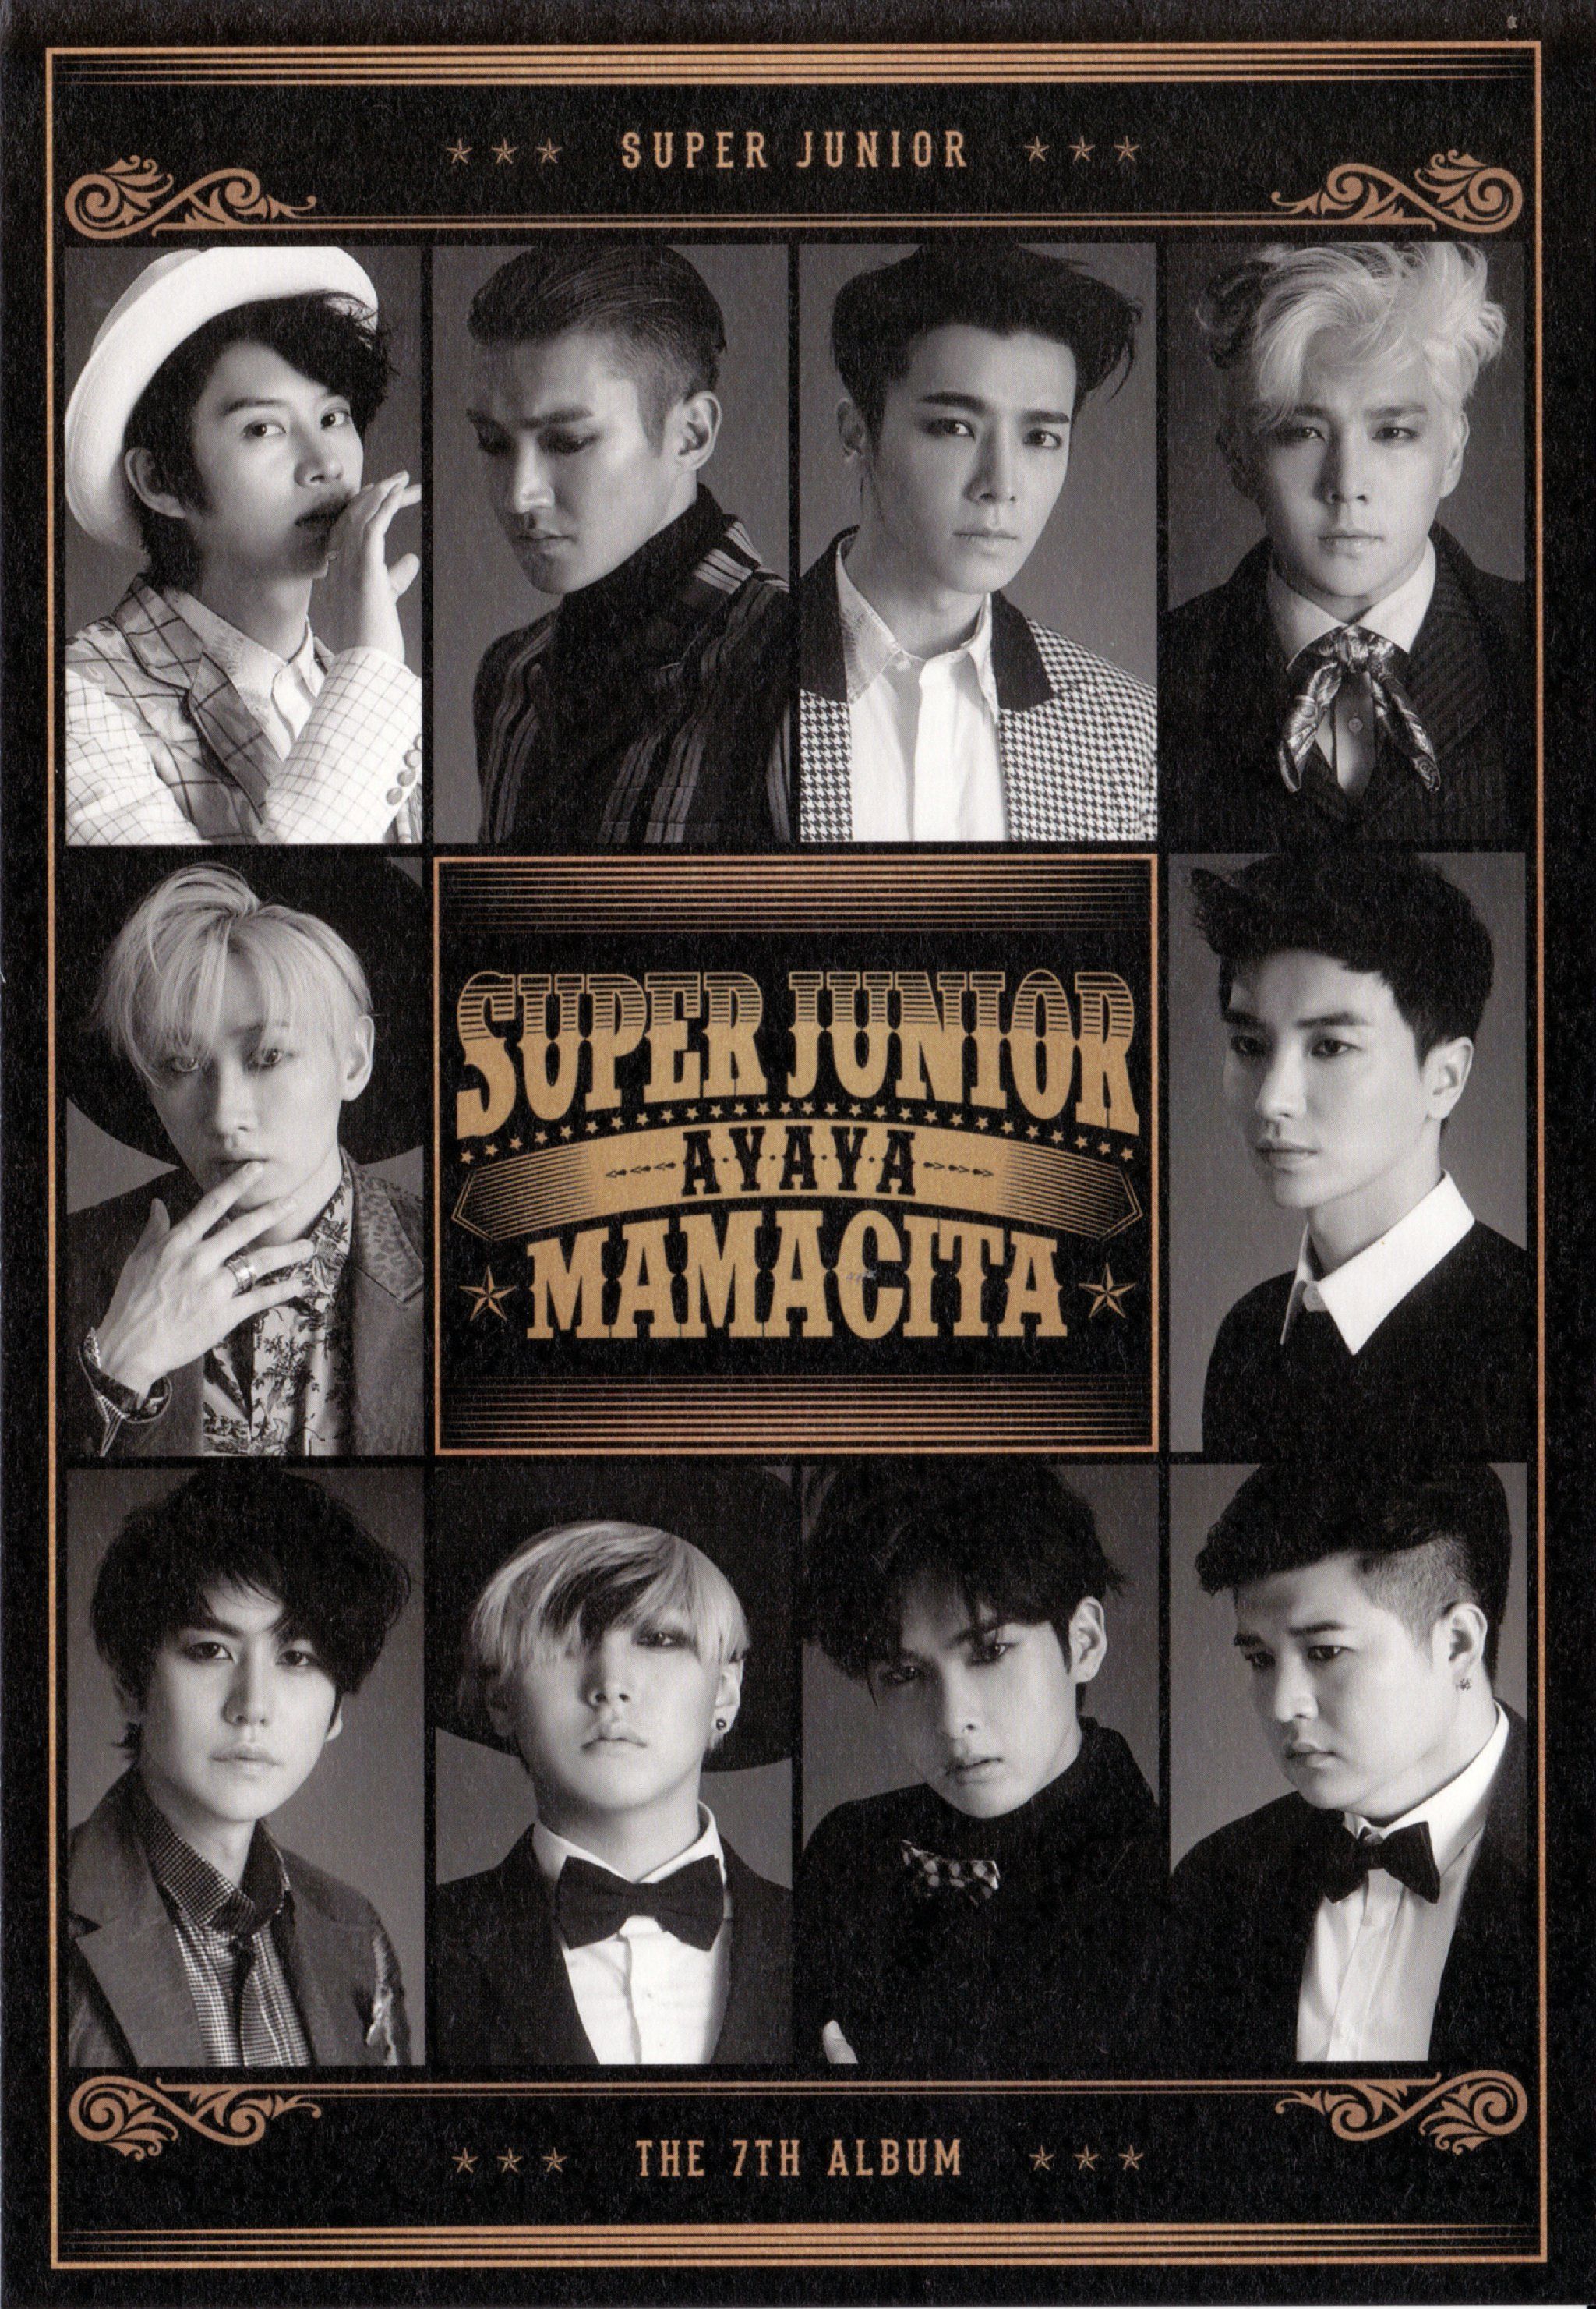 Super Junior Mamacita 7jib A Versiyon Hq Poster K Pop In